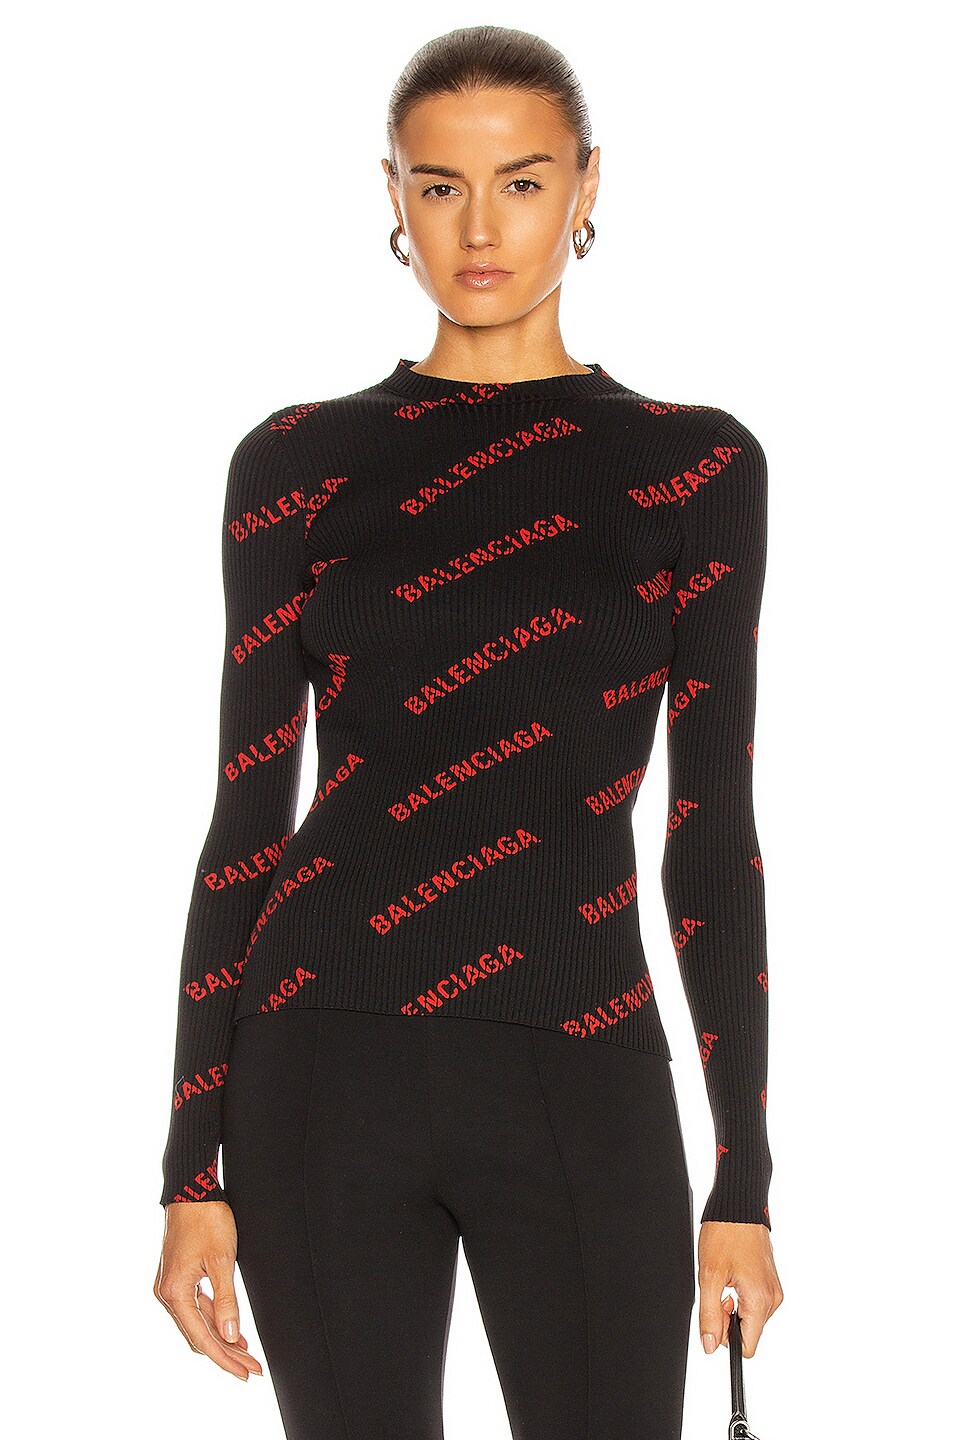 Balenciaga Long Sleeve Crewneck Sweater in Black & Red | FWRD